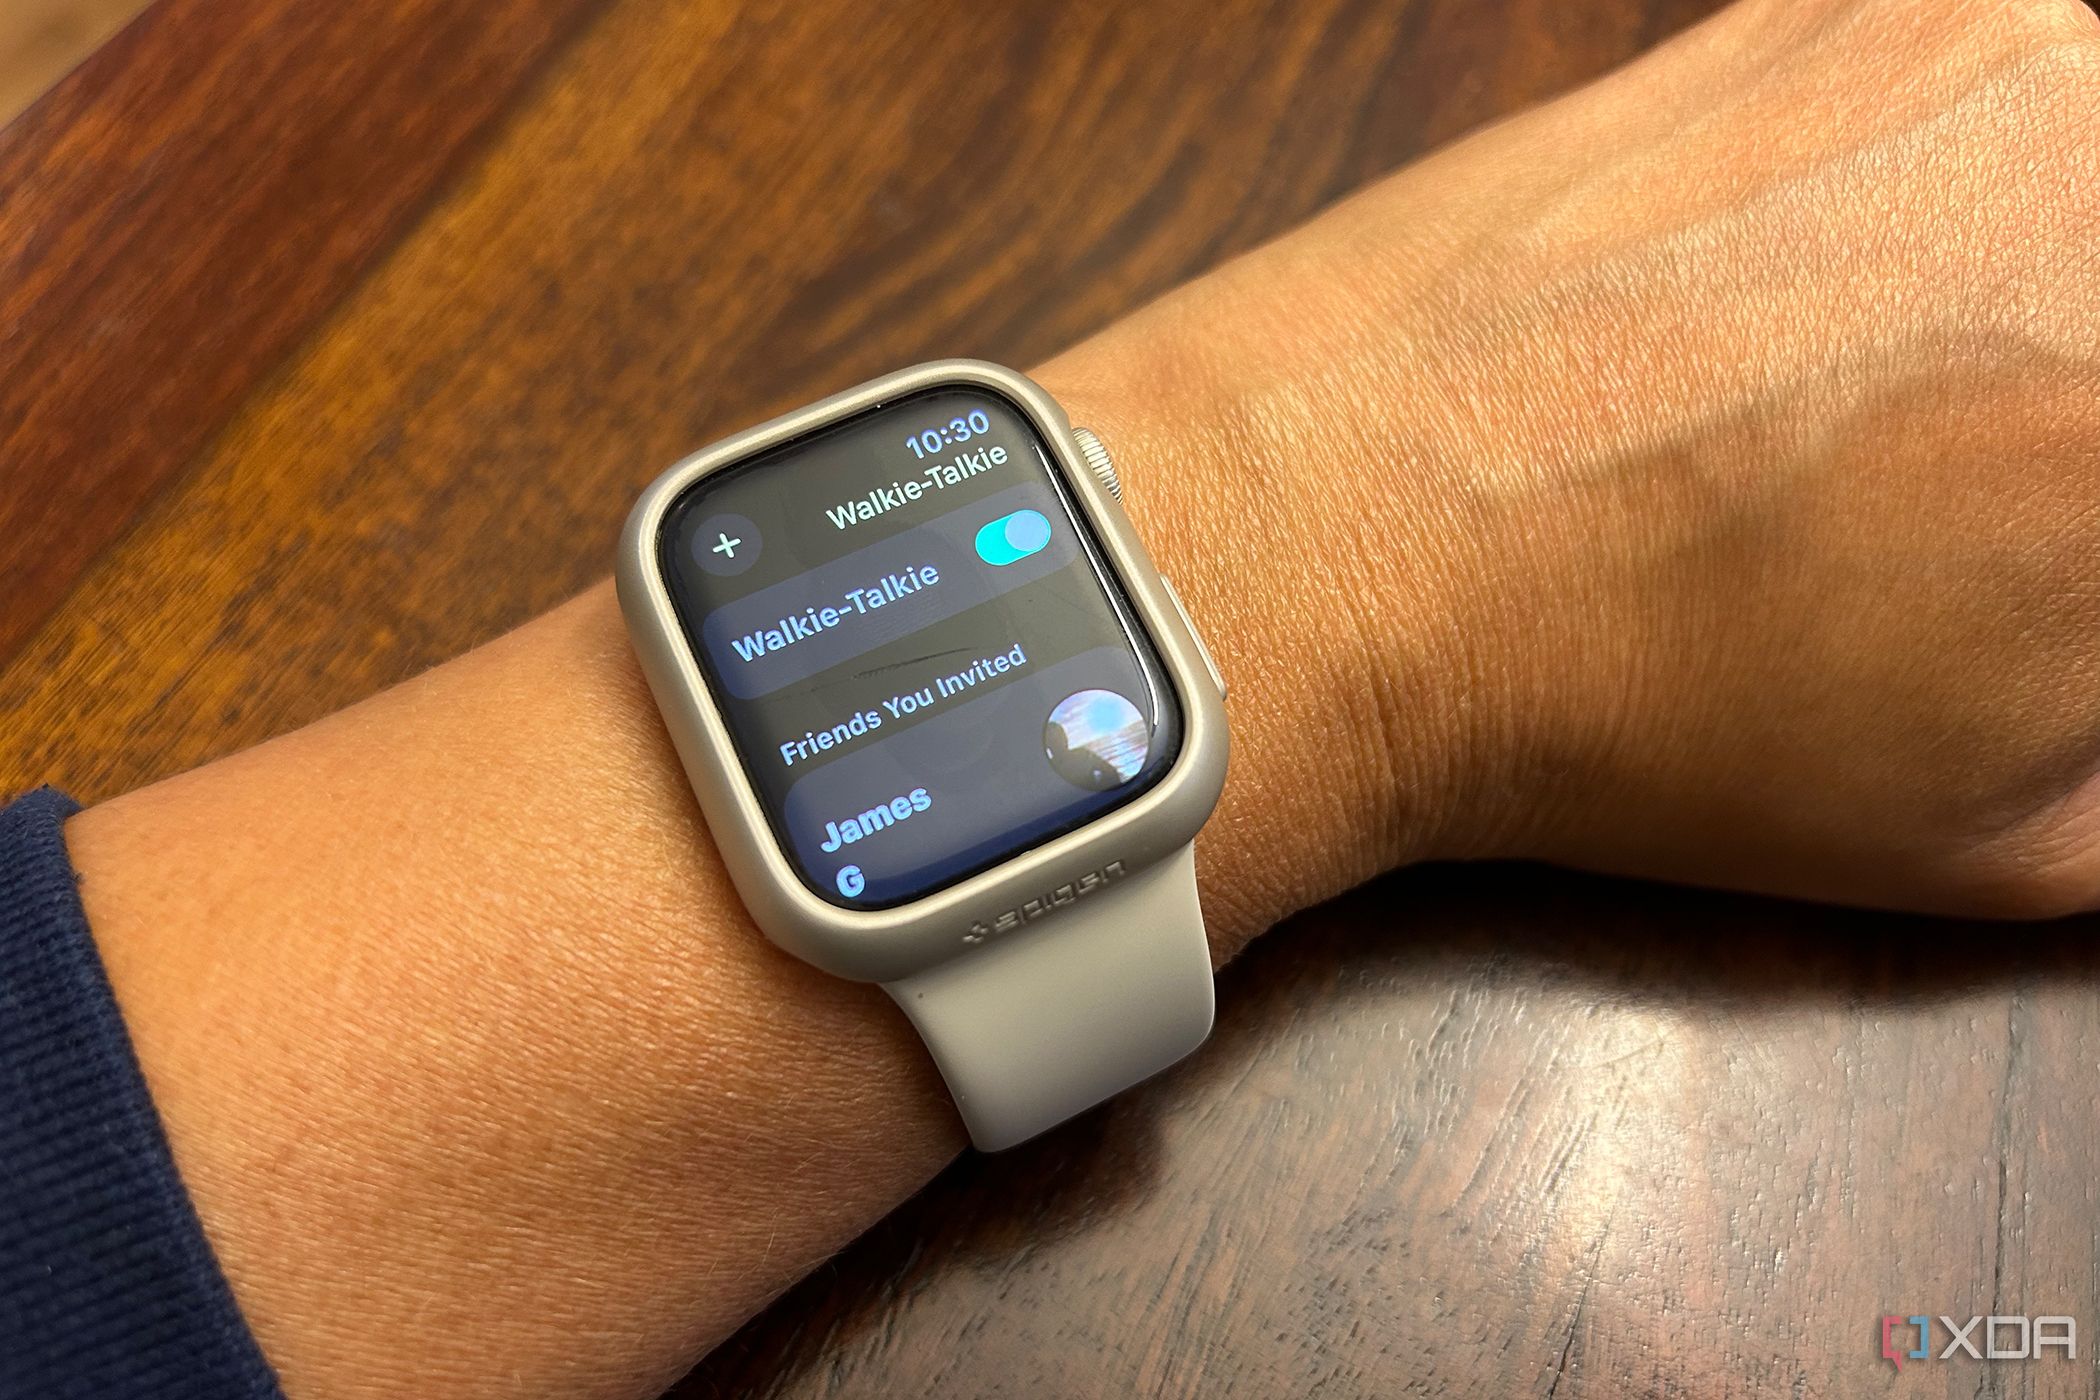 The Apple Watch showing the walkie-talkie screen.